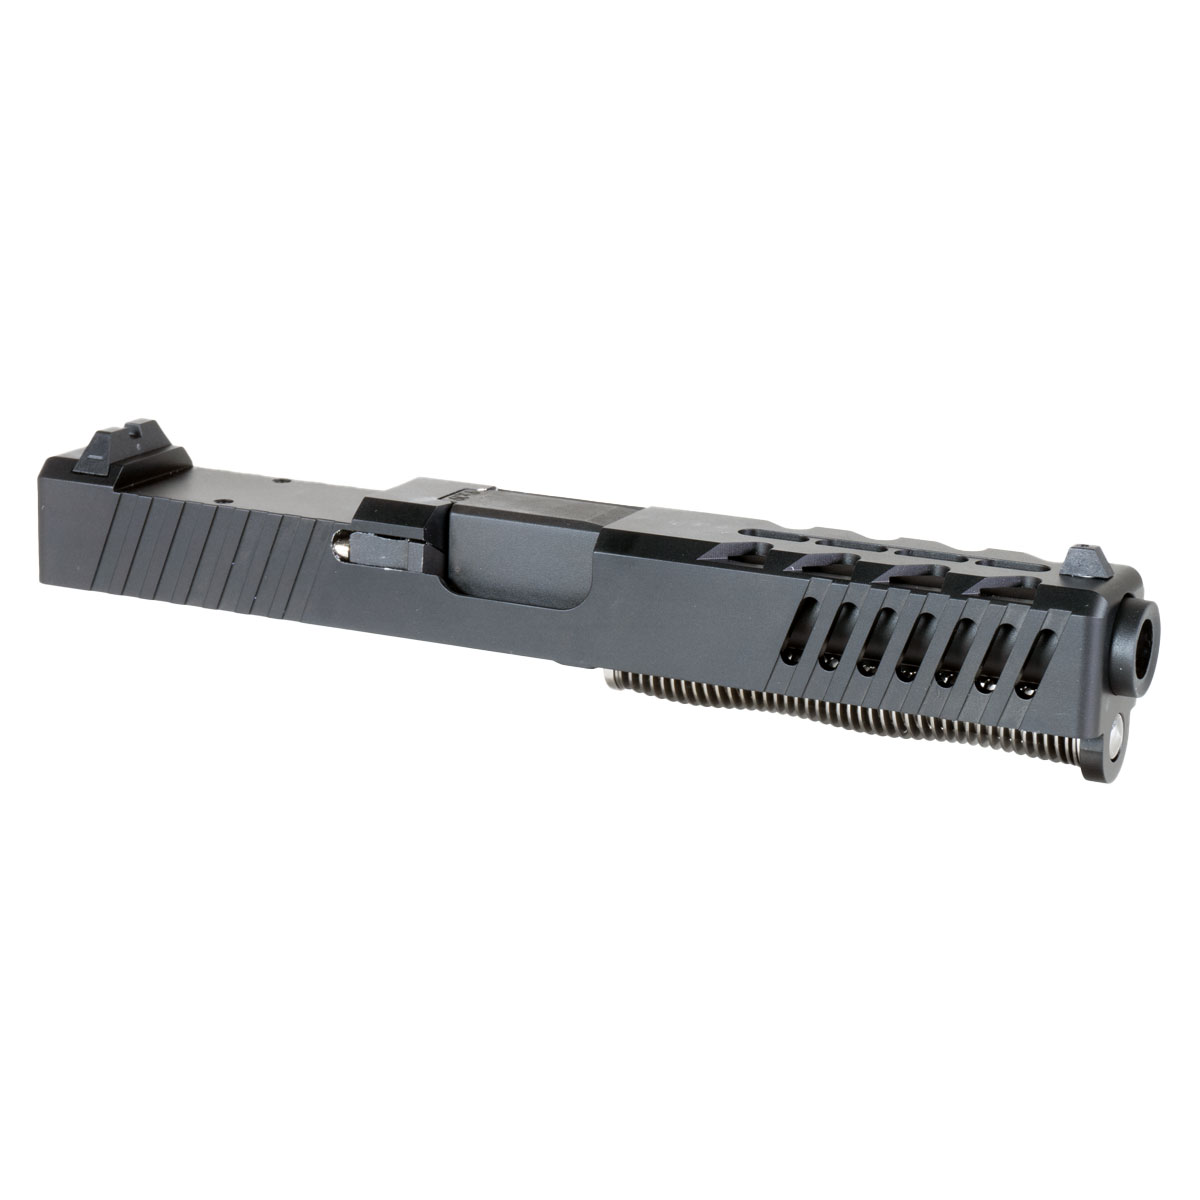 DTT 'Assaultron' 9mm Complete Slide Kit - Glock 17 Gen 1-3 Compatible